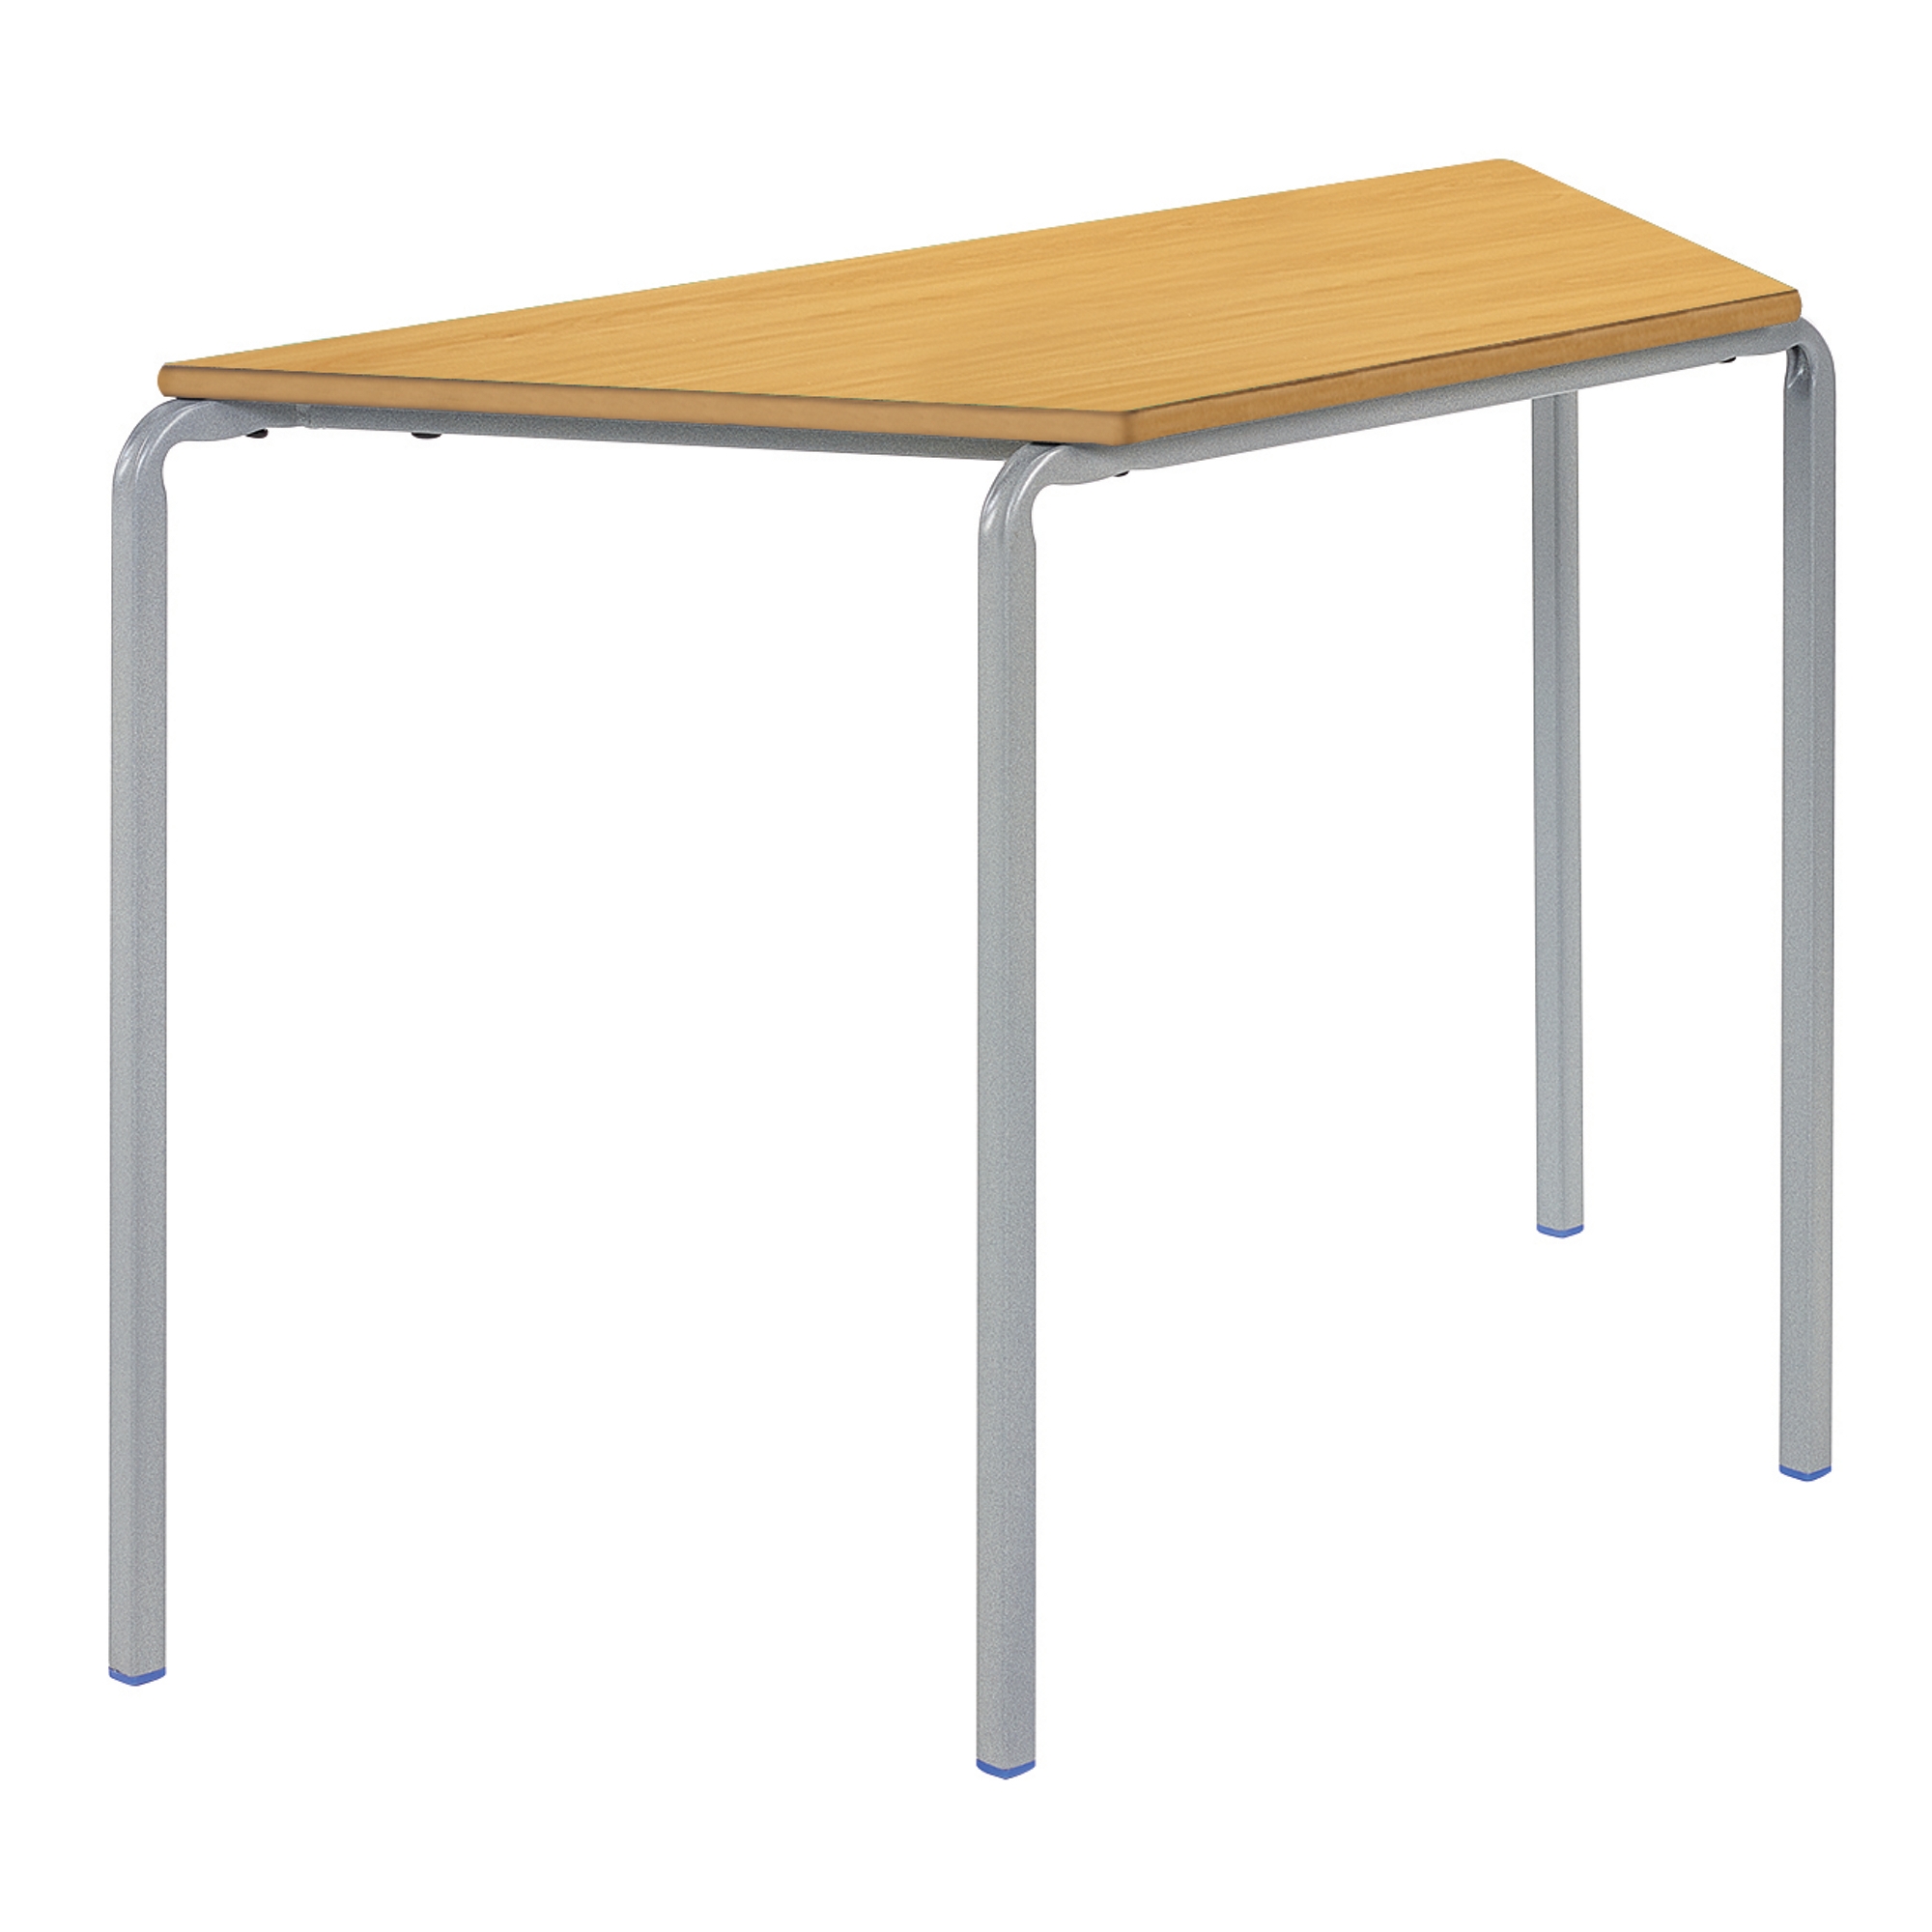 Classmates Trapezoidal Crushed Bent Classroom Table - 1100 x 550 x 640mm - Beech